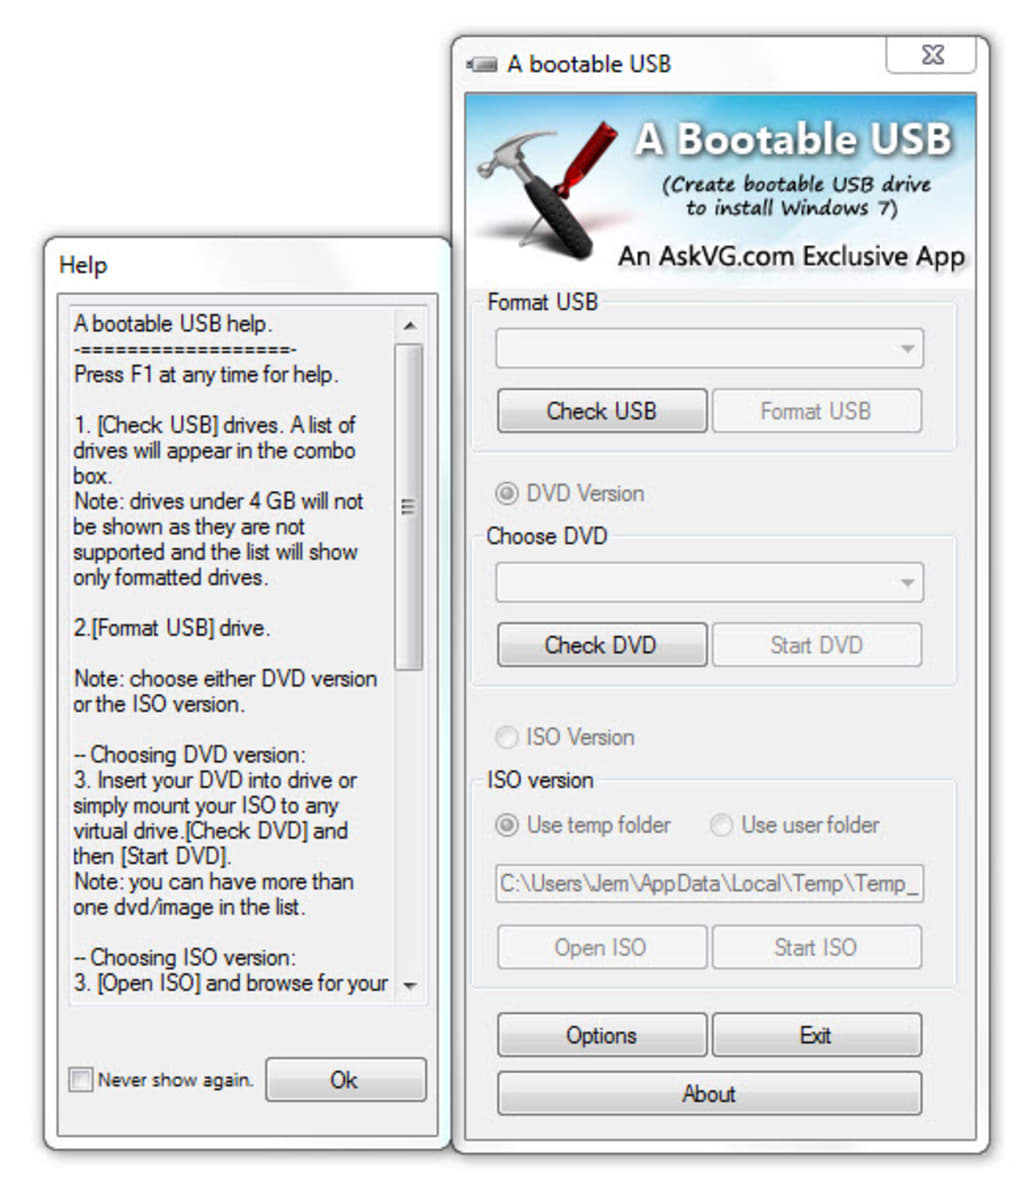 A Bootable USB 0.9.6.508 beta full